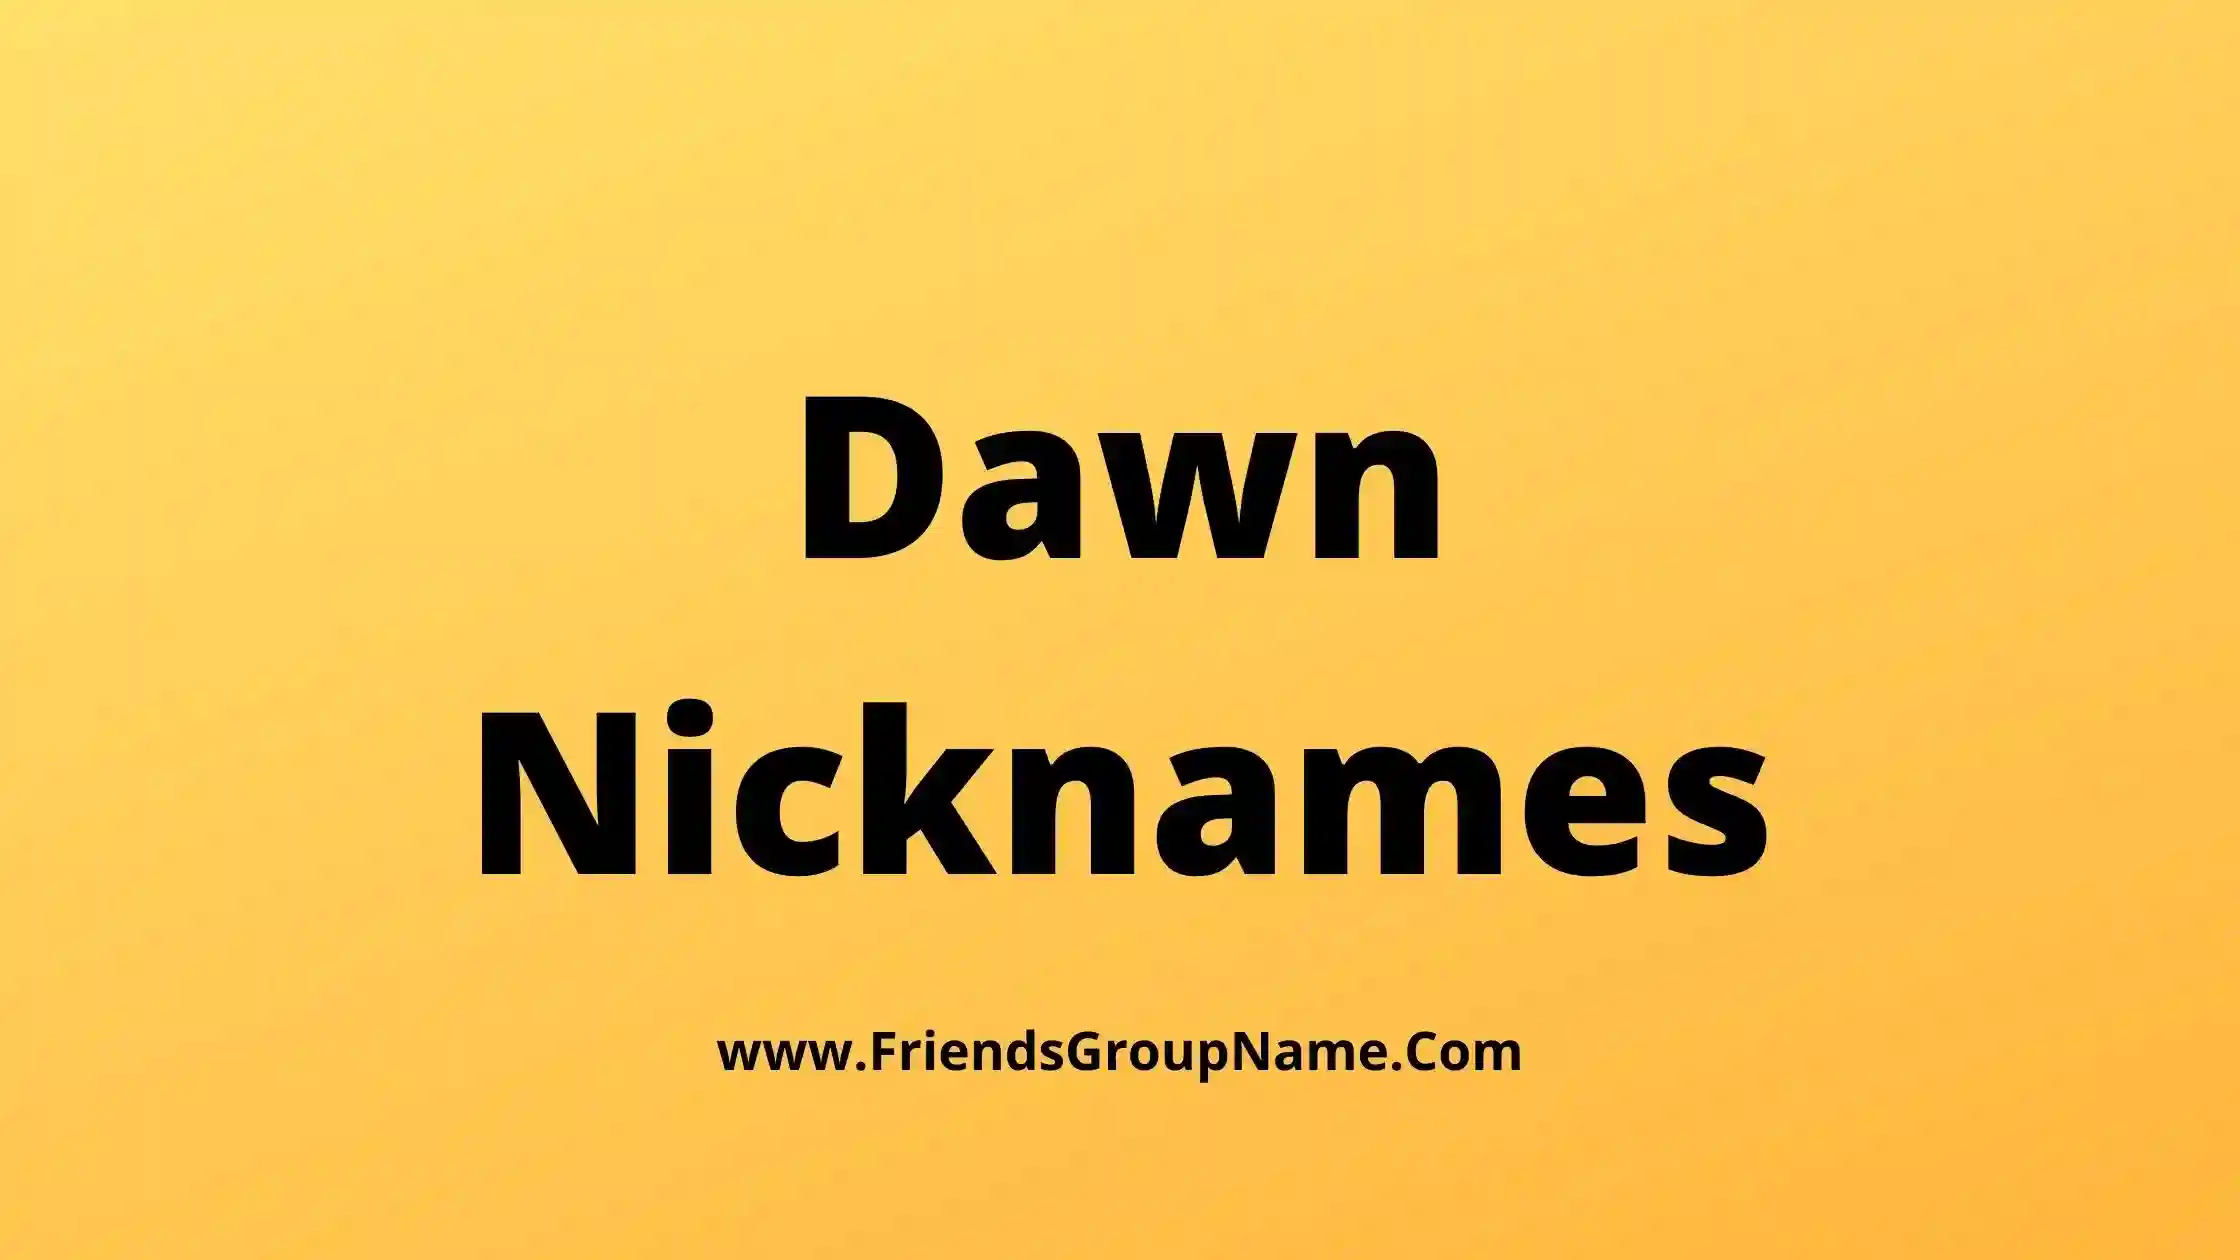 Dawn Nicknames